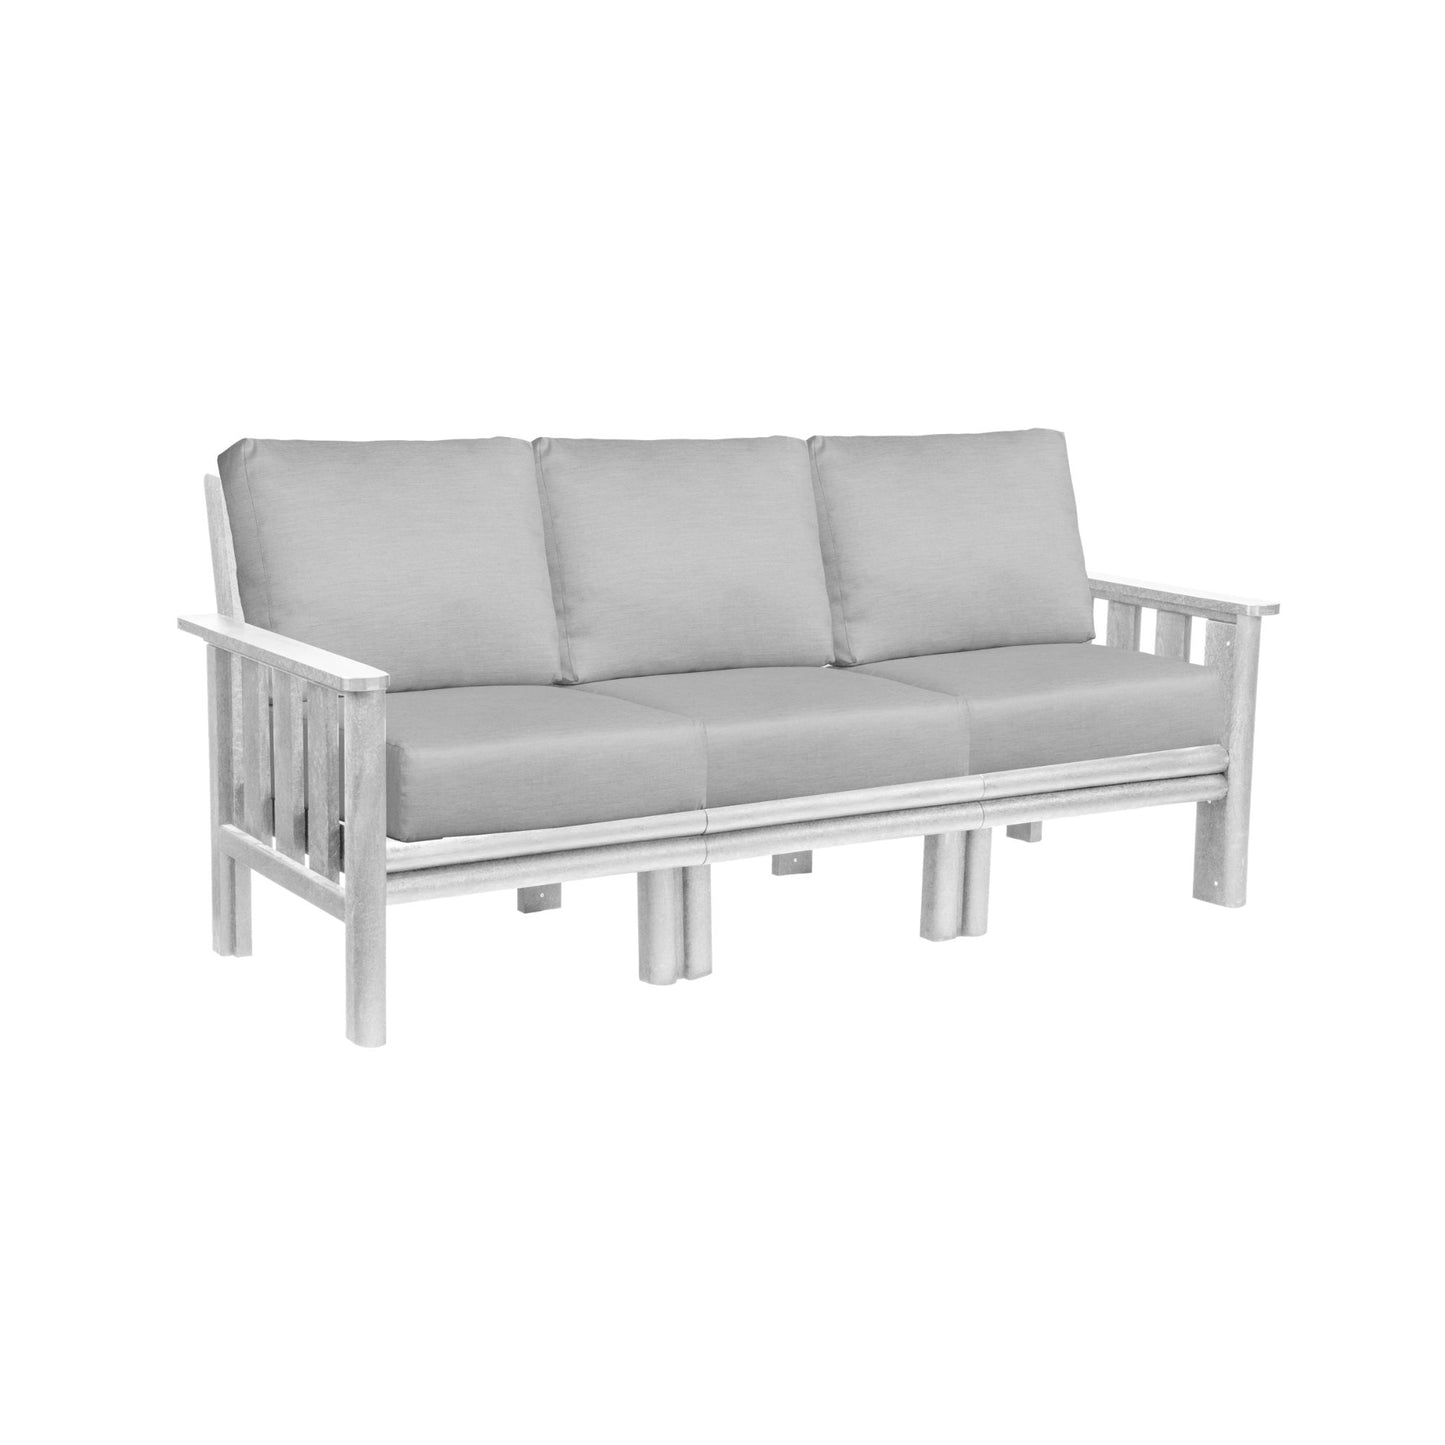 CR Plastics Stratford Sofa with Cushions